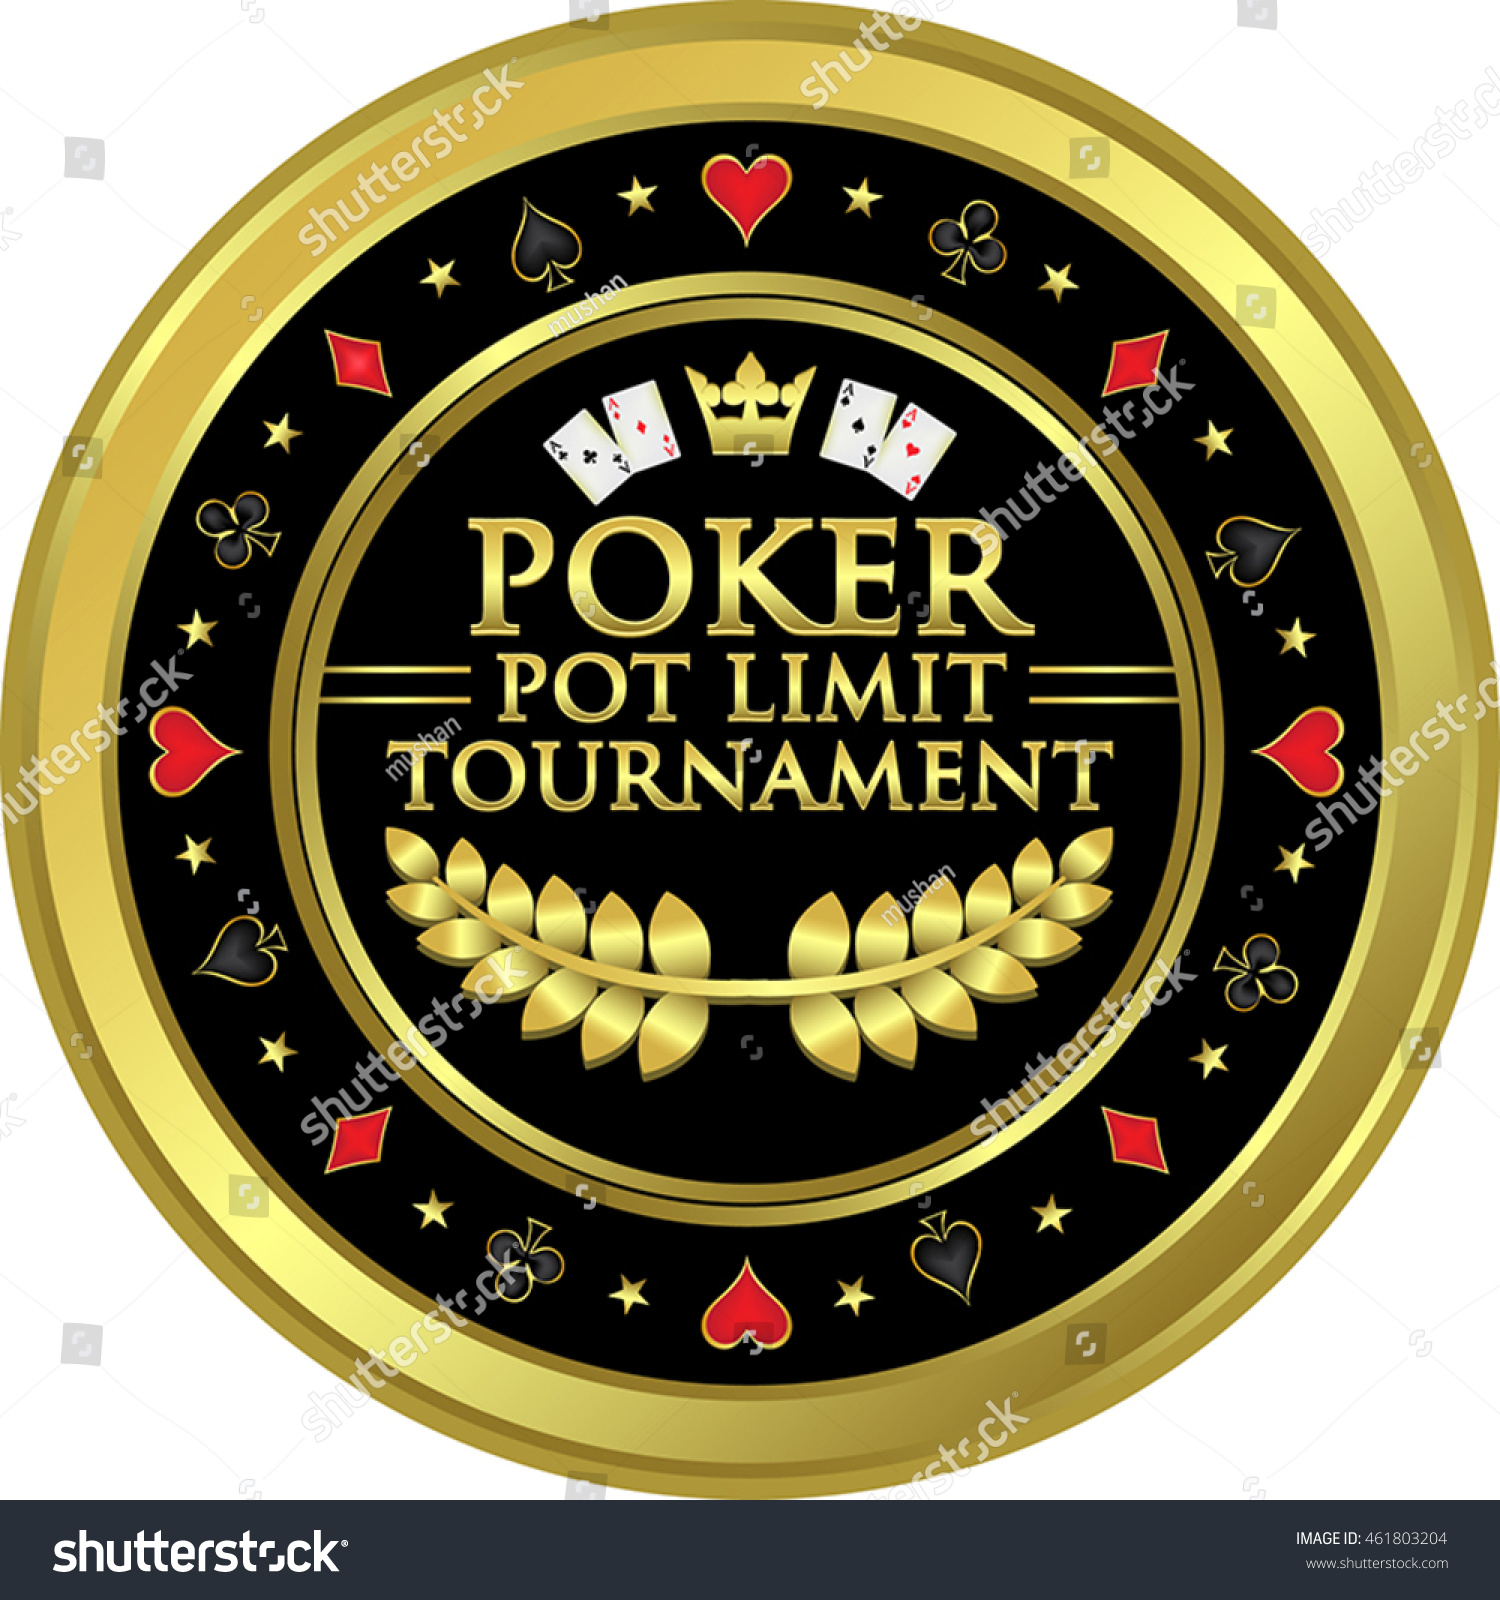 Poker Pot Limit Tournament Label Stock Vector 461803204 Shutterstock